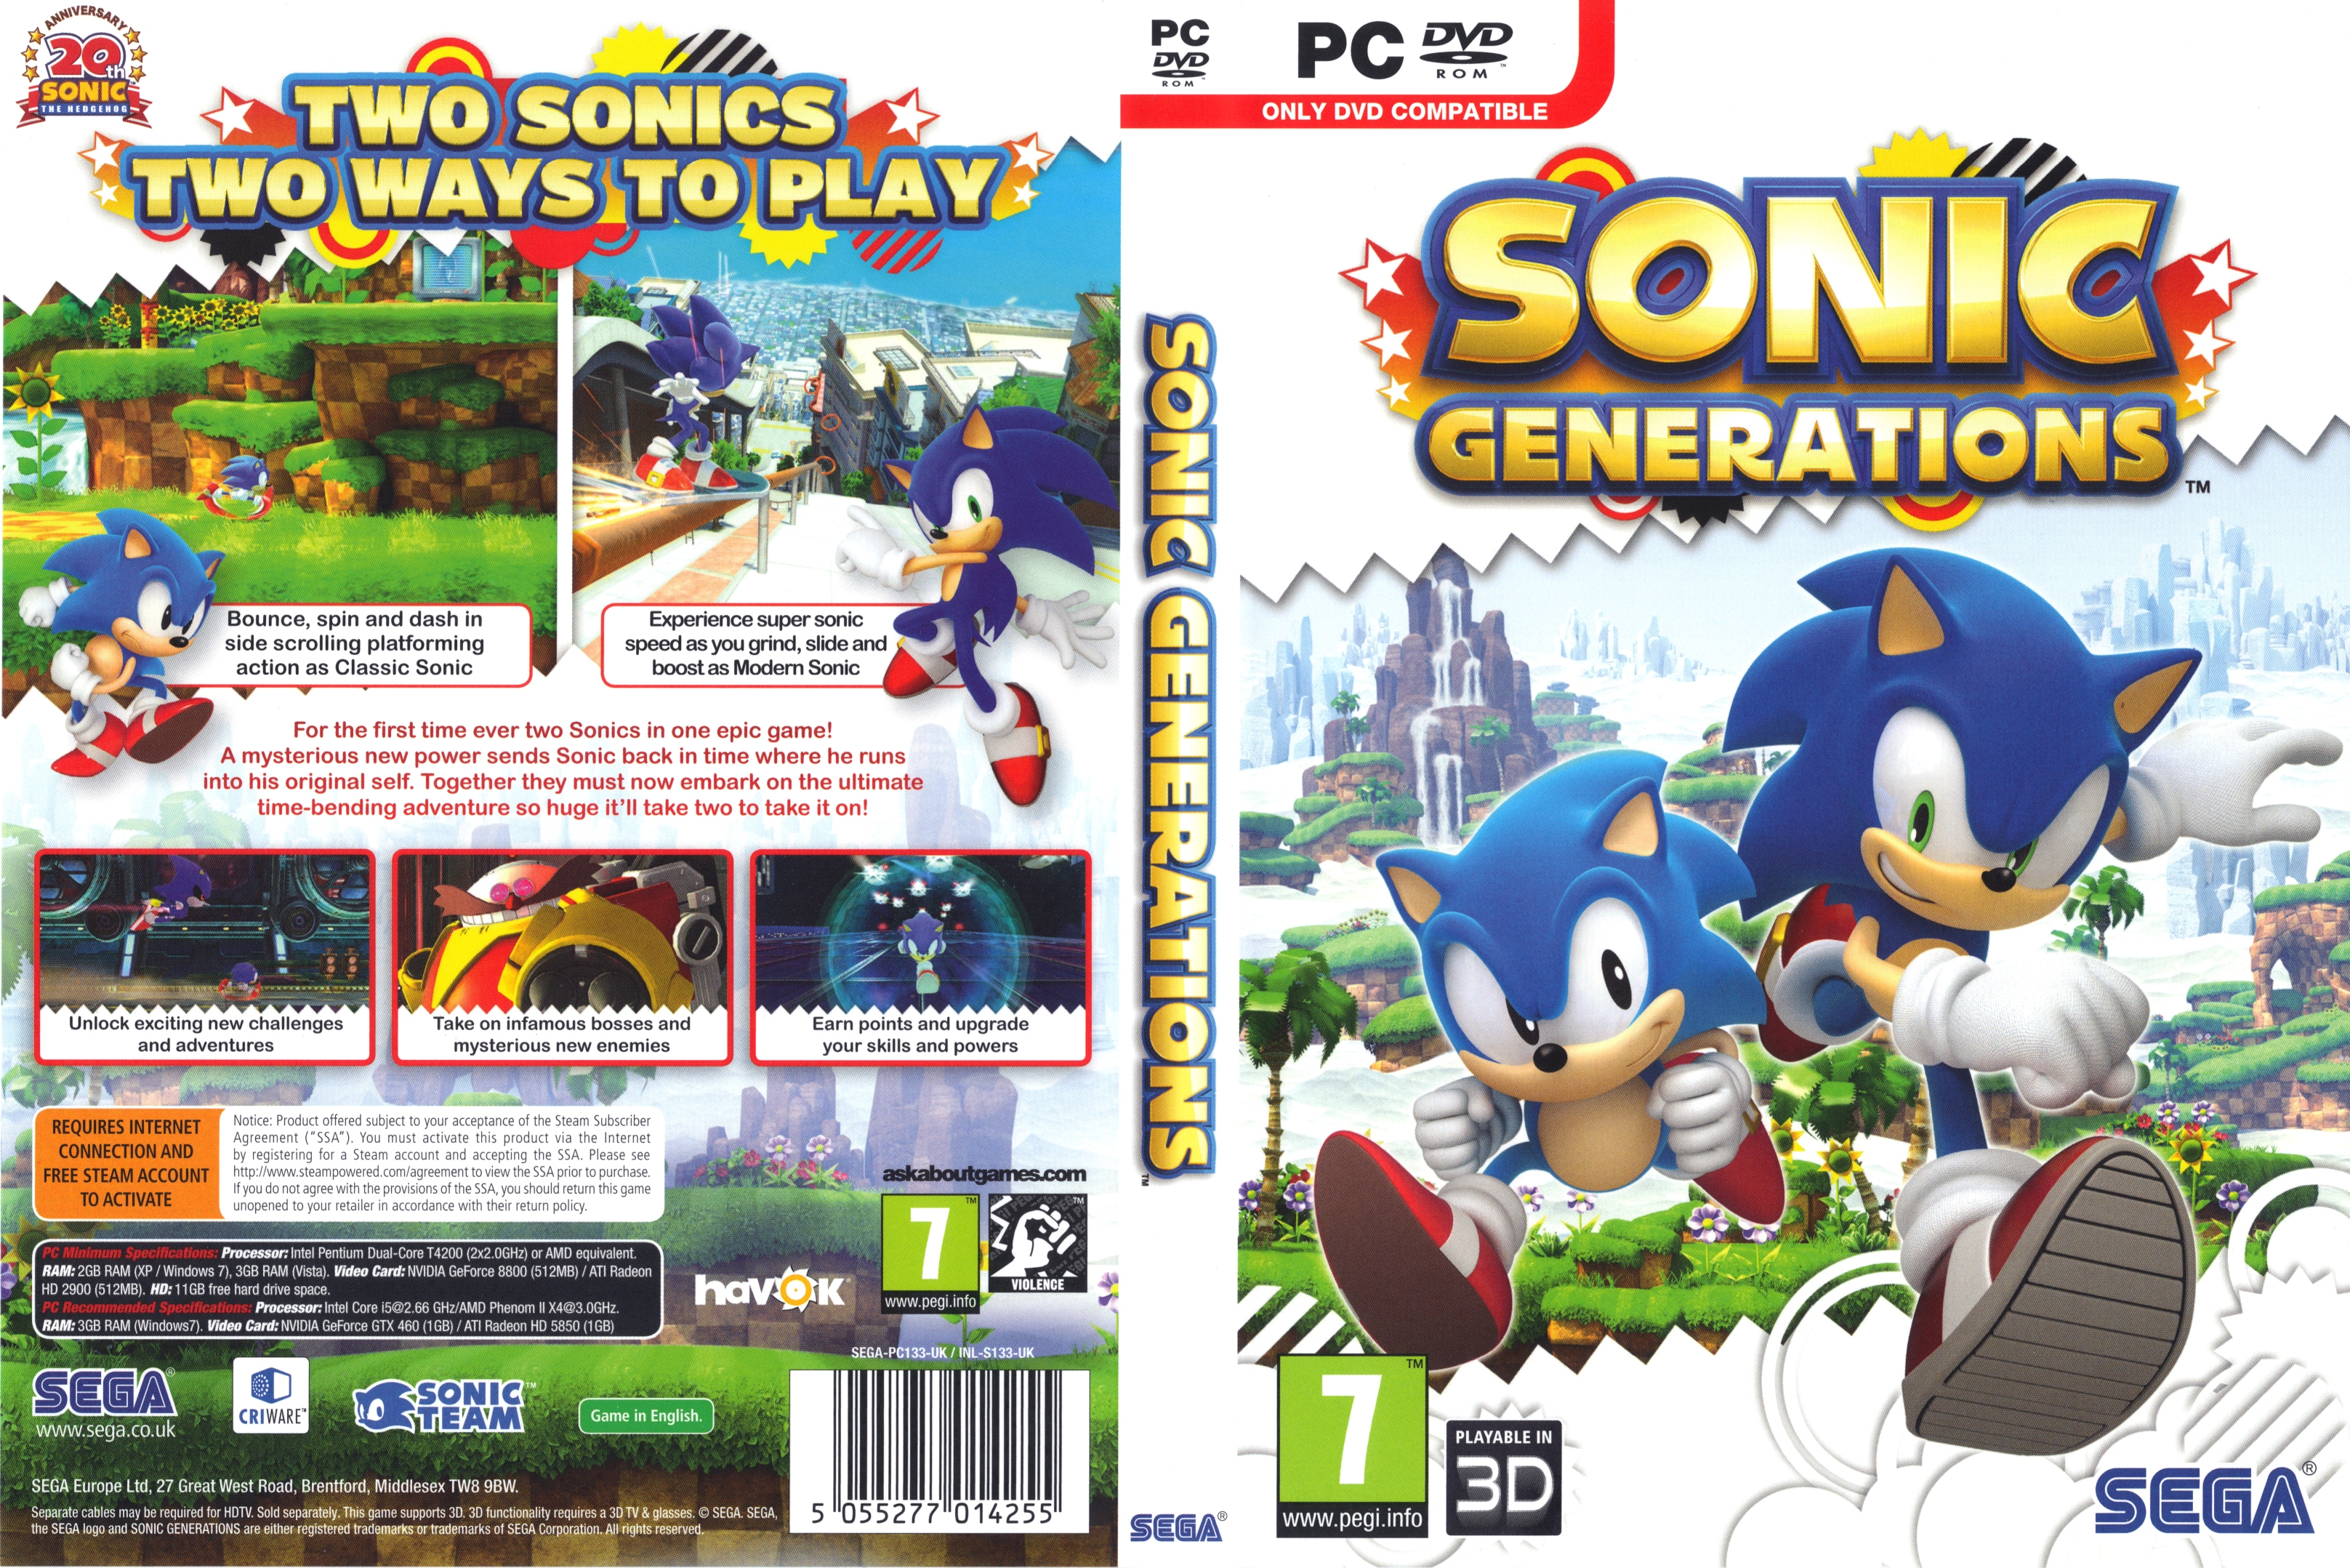 Digital Foundry: Revisitamos Sonic Generations: corre lindamente no PC